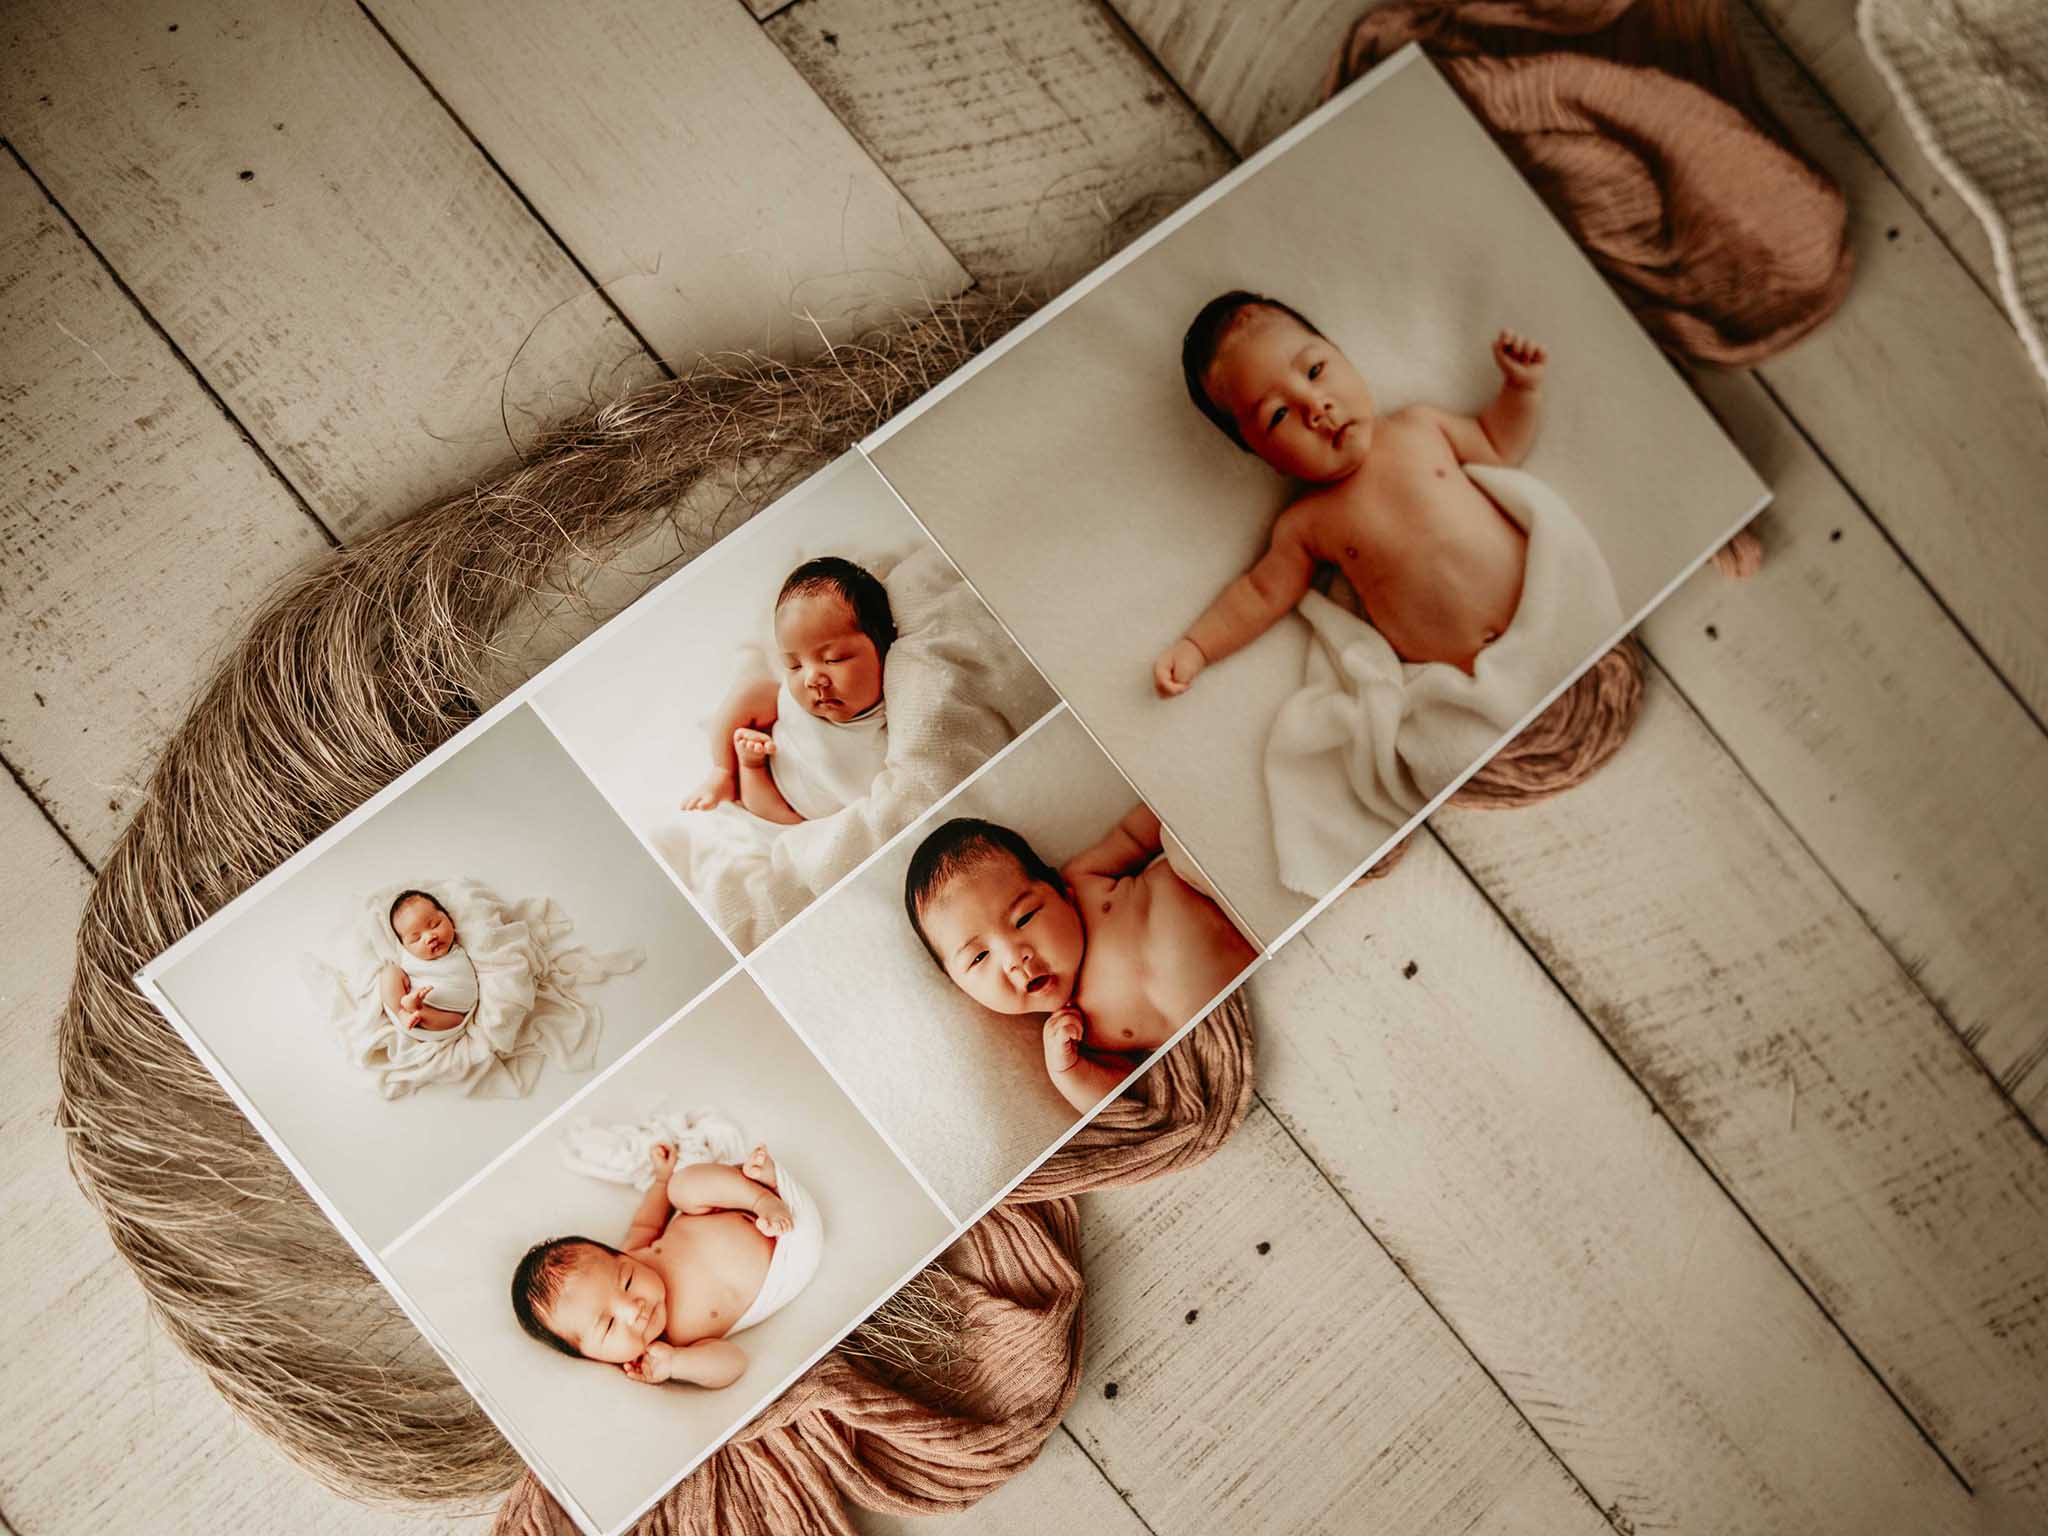 Prop Ideas for Newborn Photos · Crabapple Photography